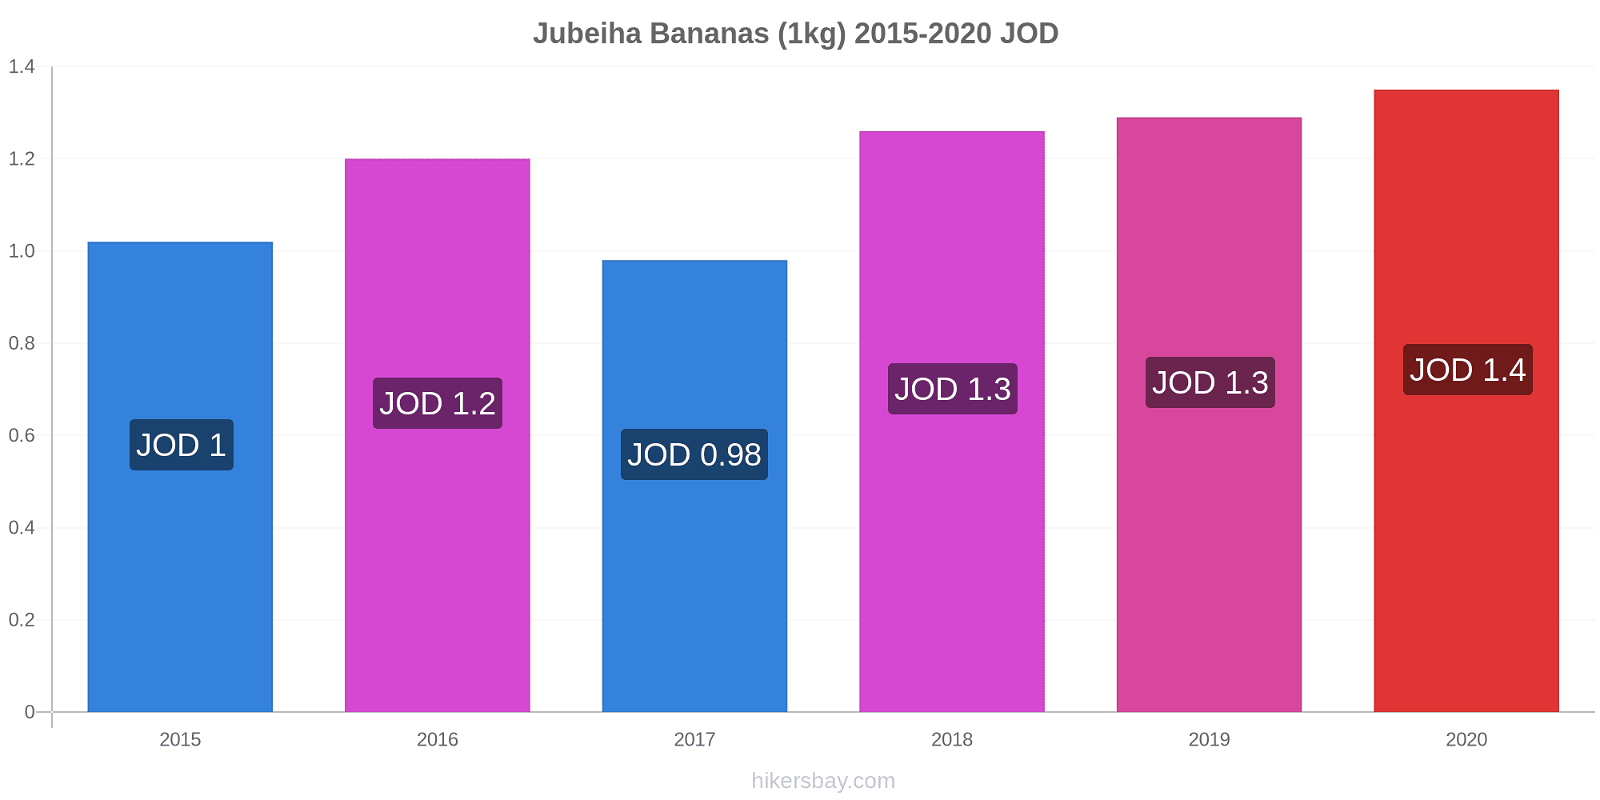 Jubeiha price changes Bananas (1kg) hikersbay.com